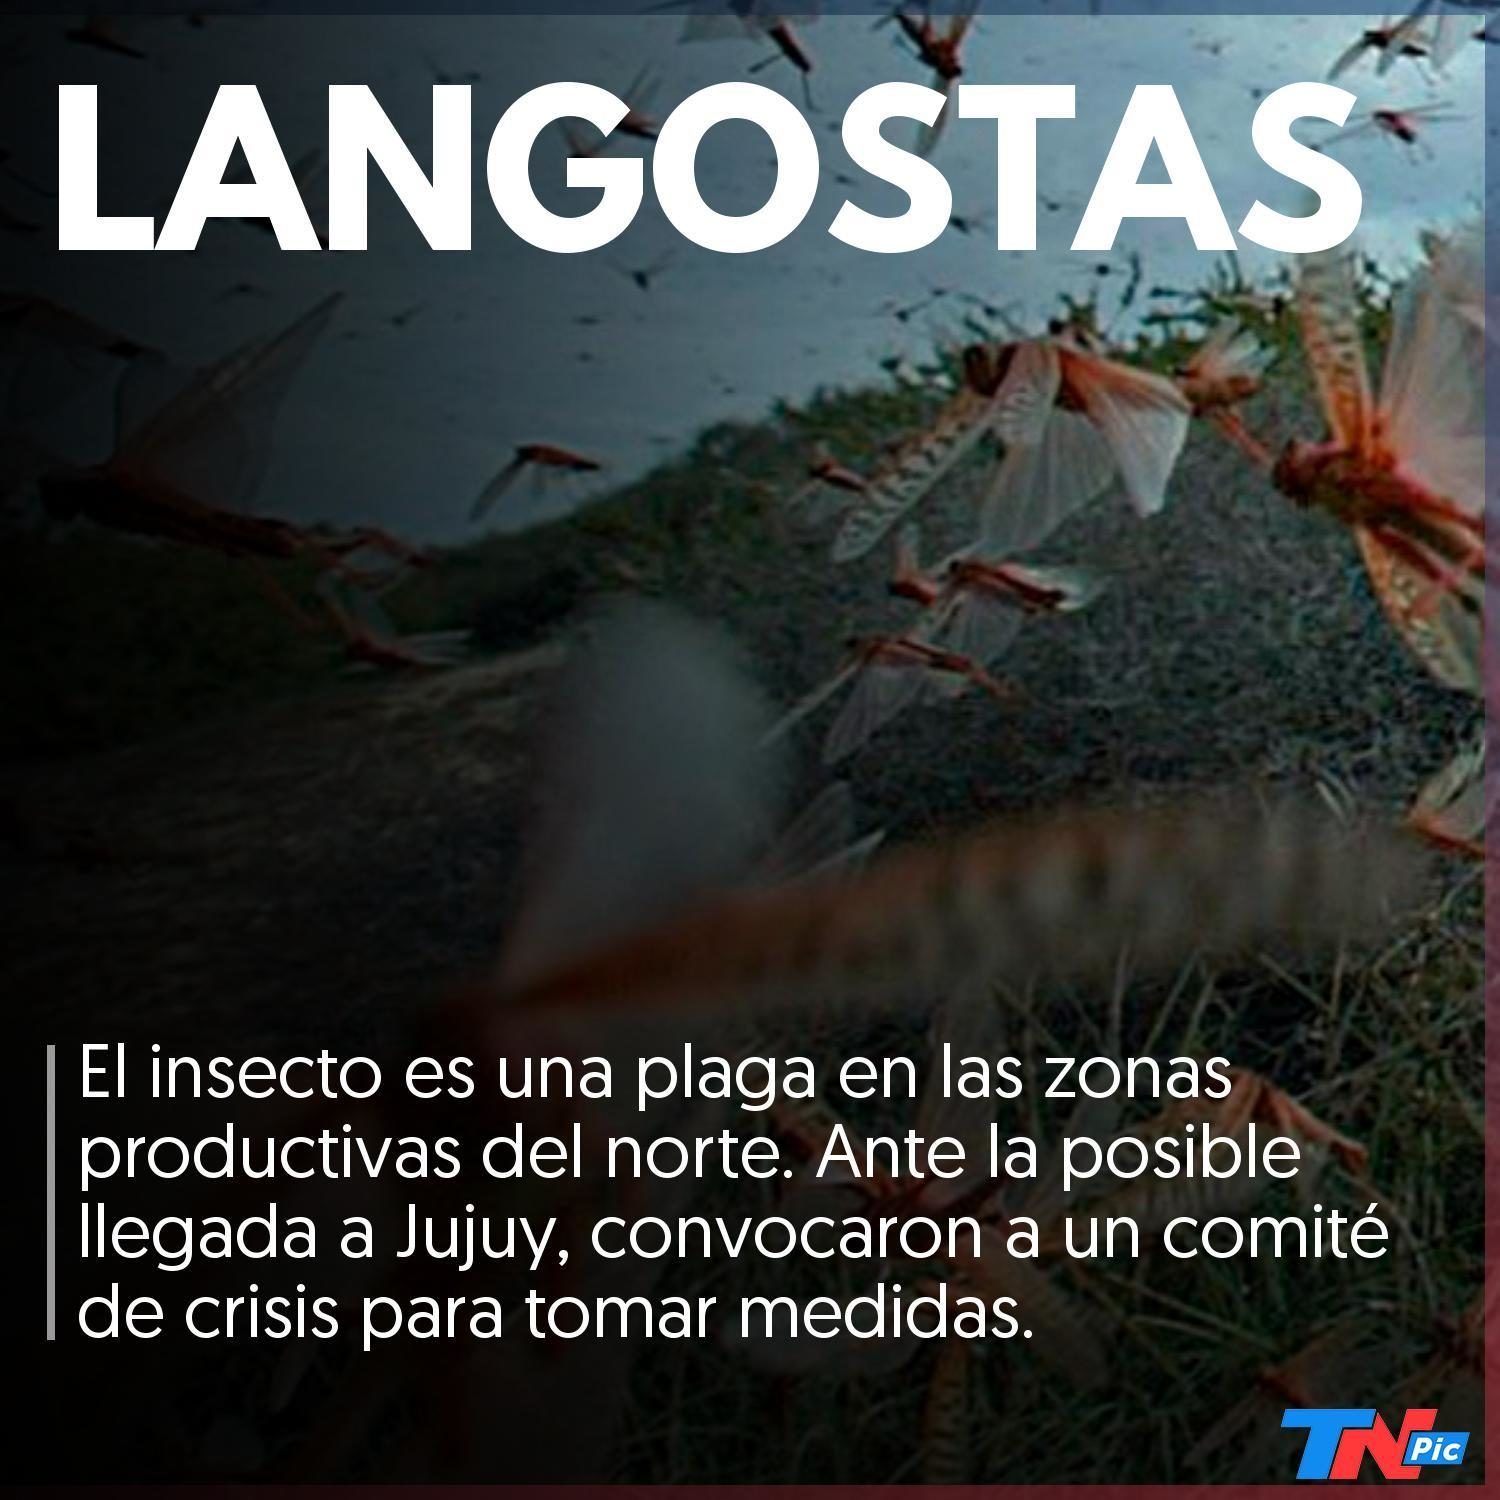 Convocan a un comité de crisis por la llegada de langostas a Jujuy, Argentina